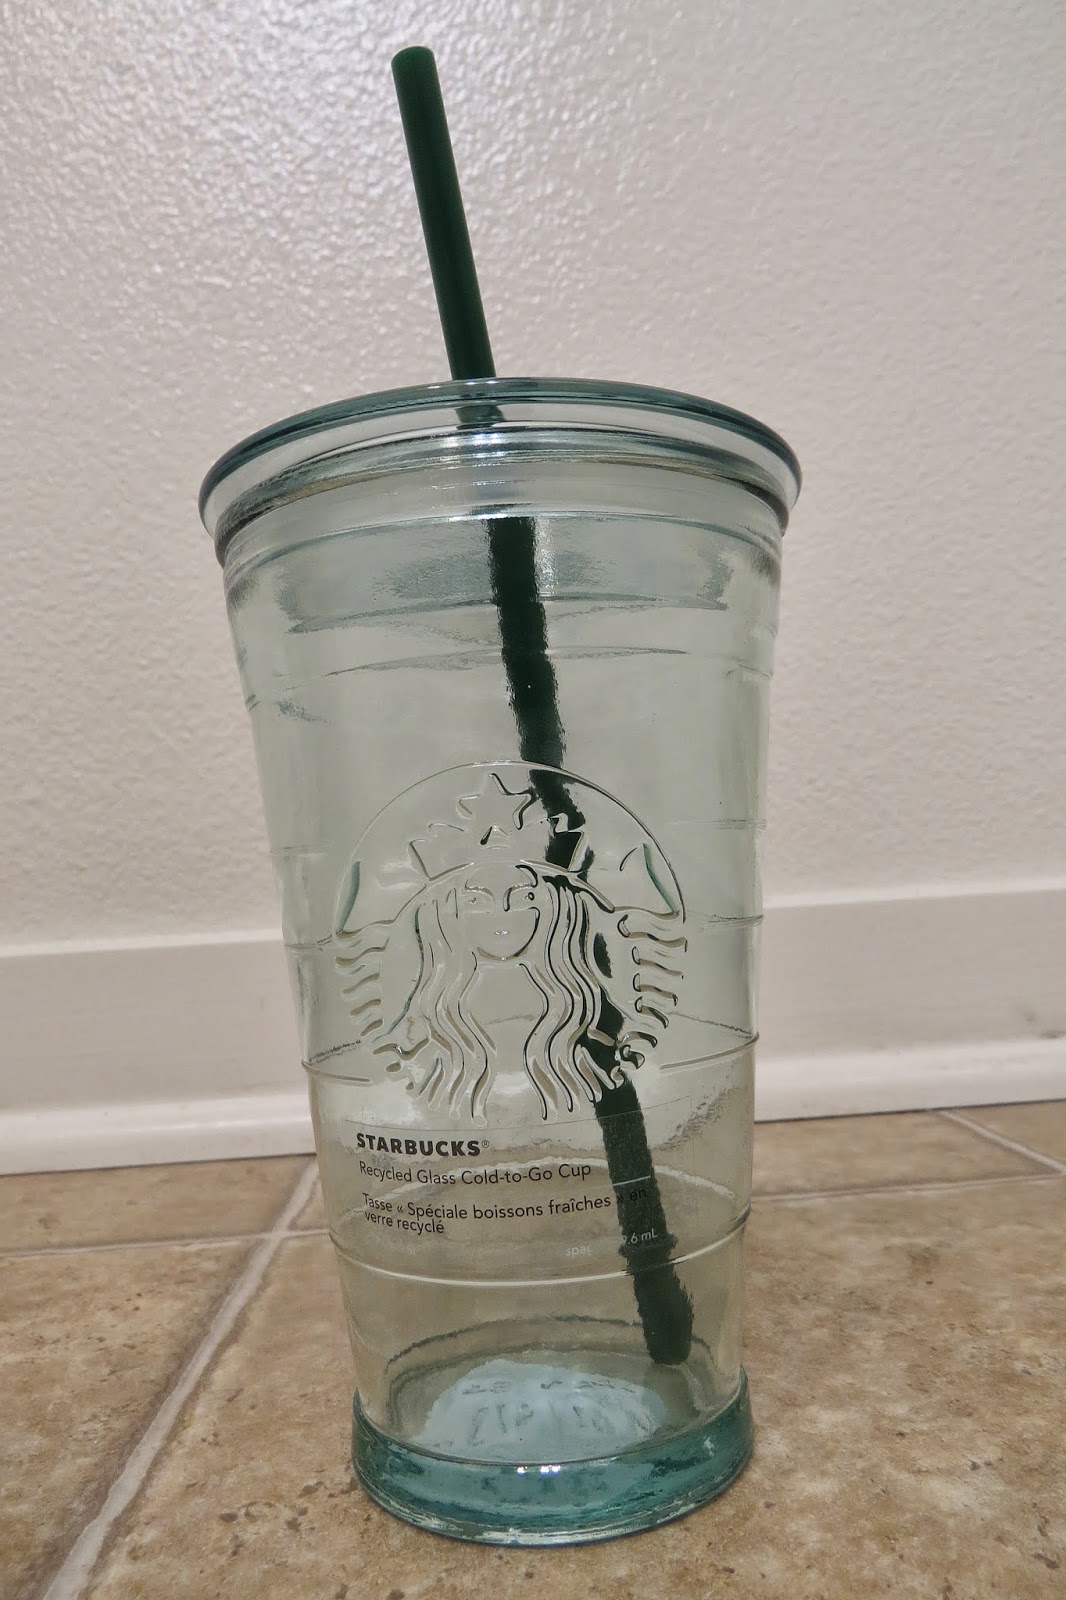 It has grown on me!: Starbucks Haul - My New Tumbler, Starbucks